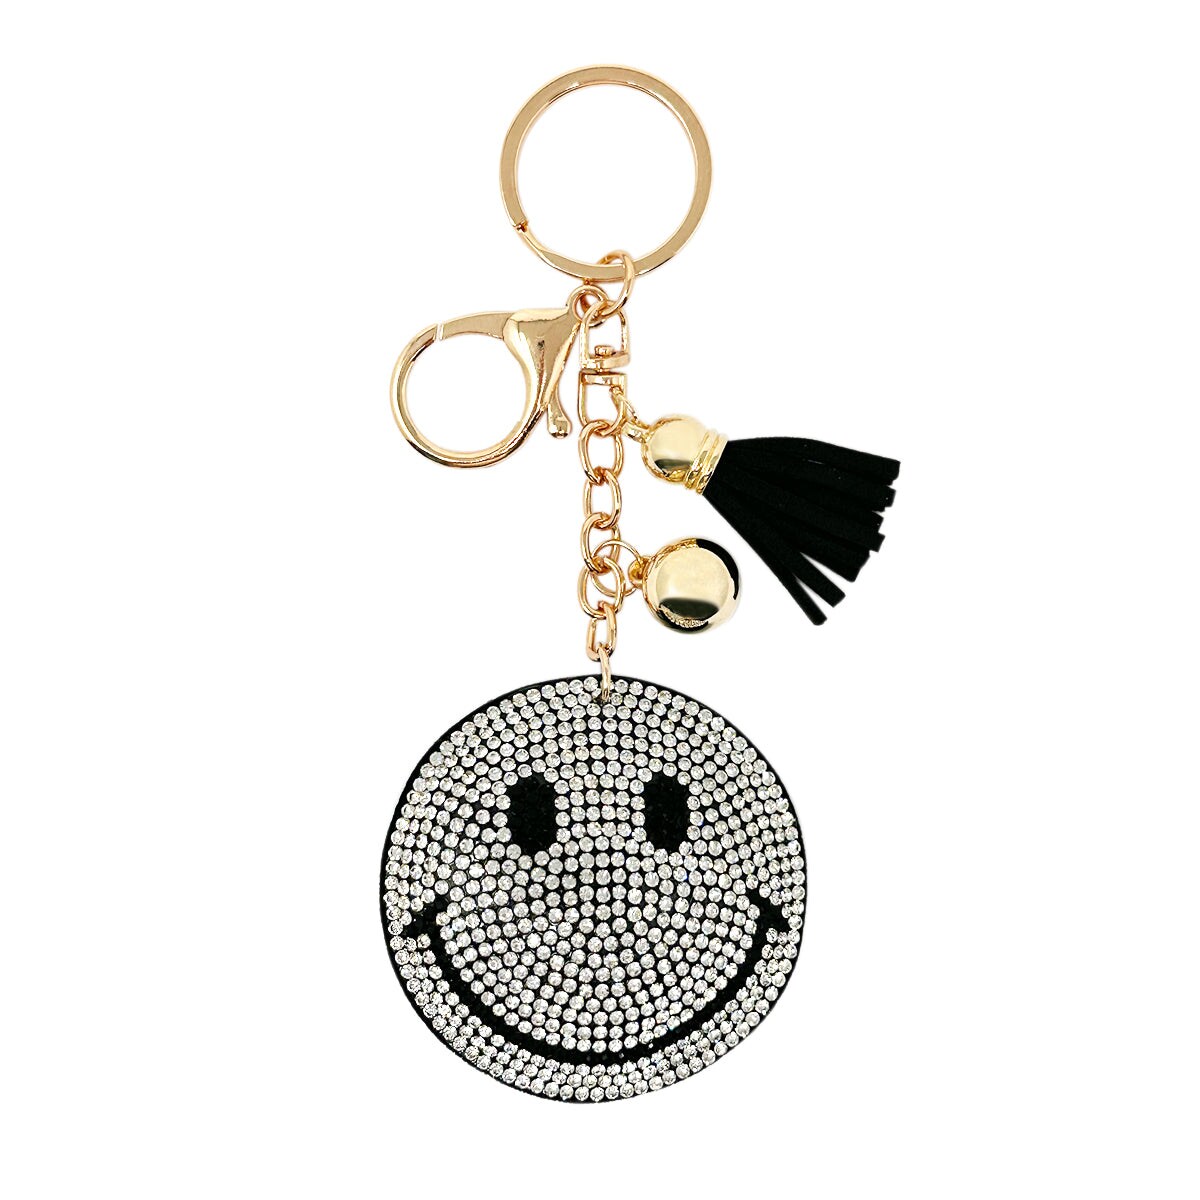 Wrapables Crystal Bling Key Chain Keyring with Tassel Car Purse Handbag Pendant, Smiles